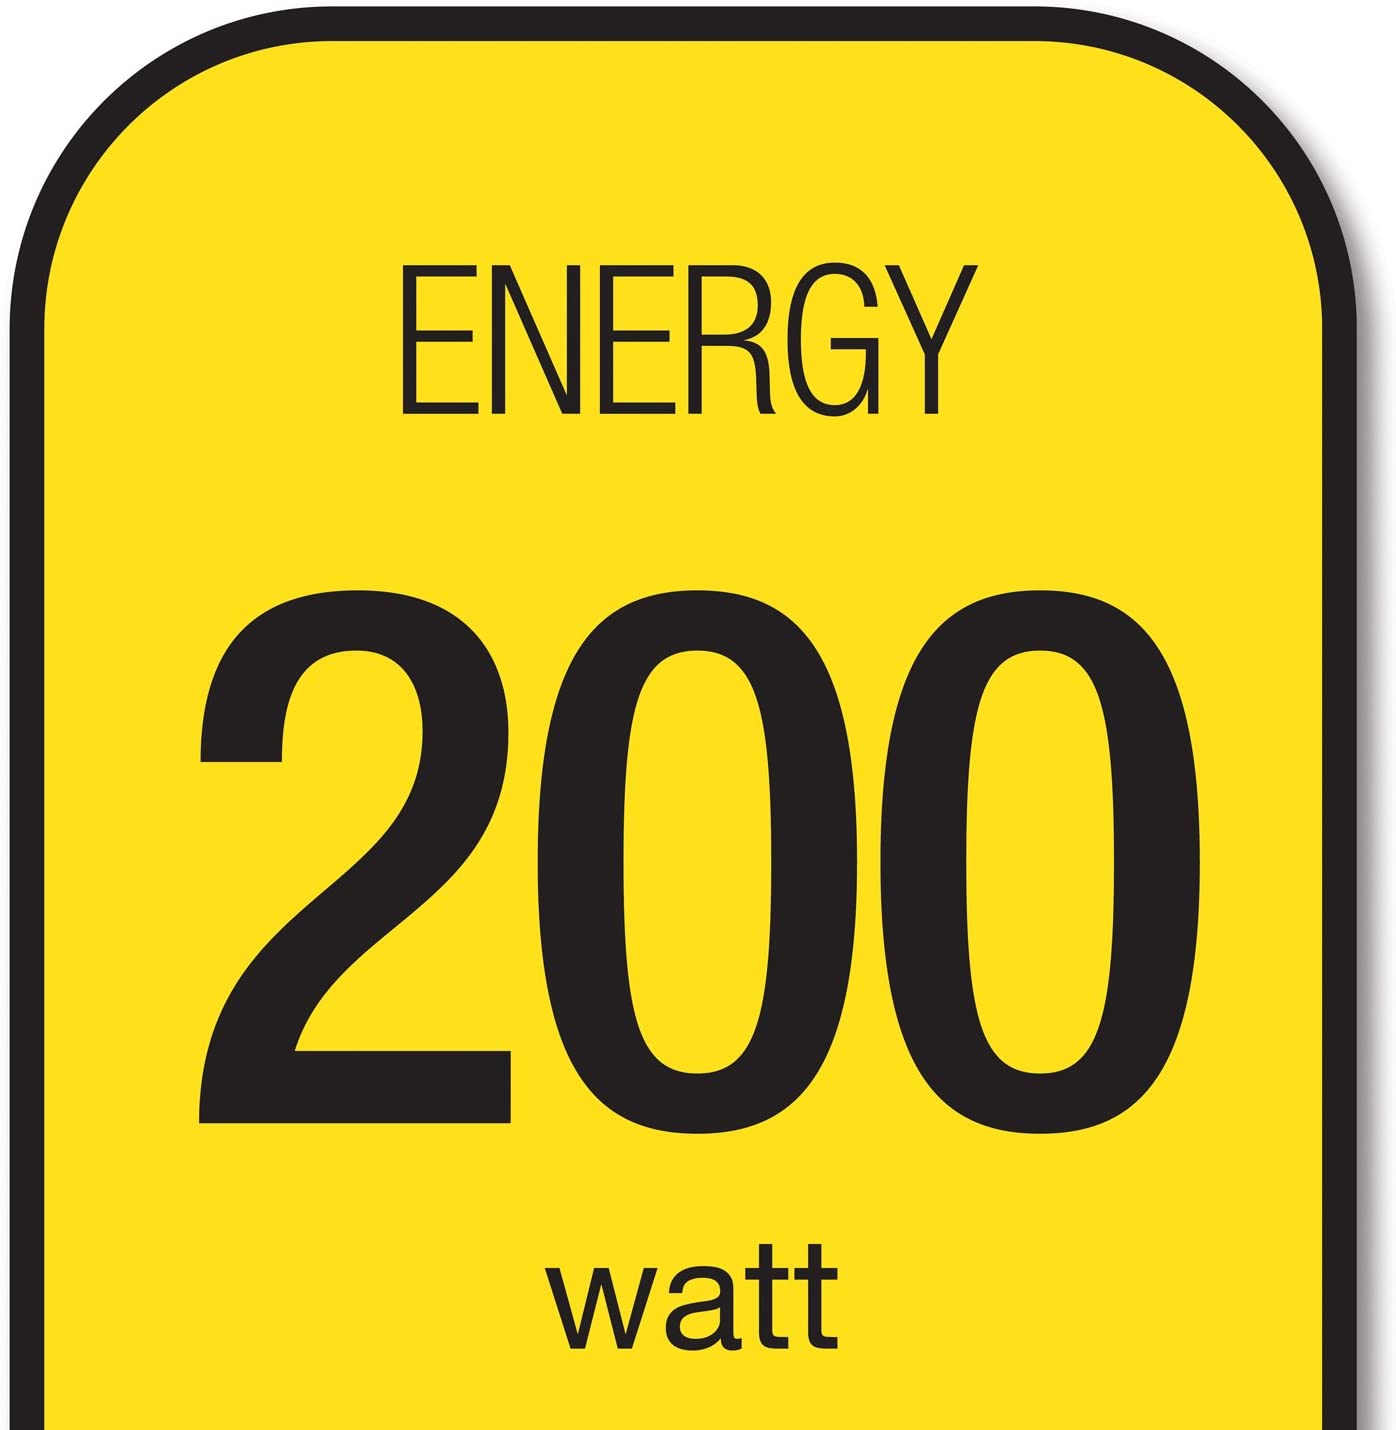 Marineland Precision Heater 200 watt